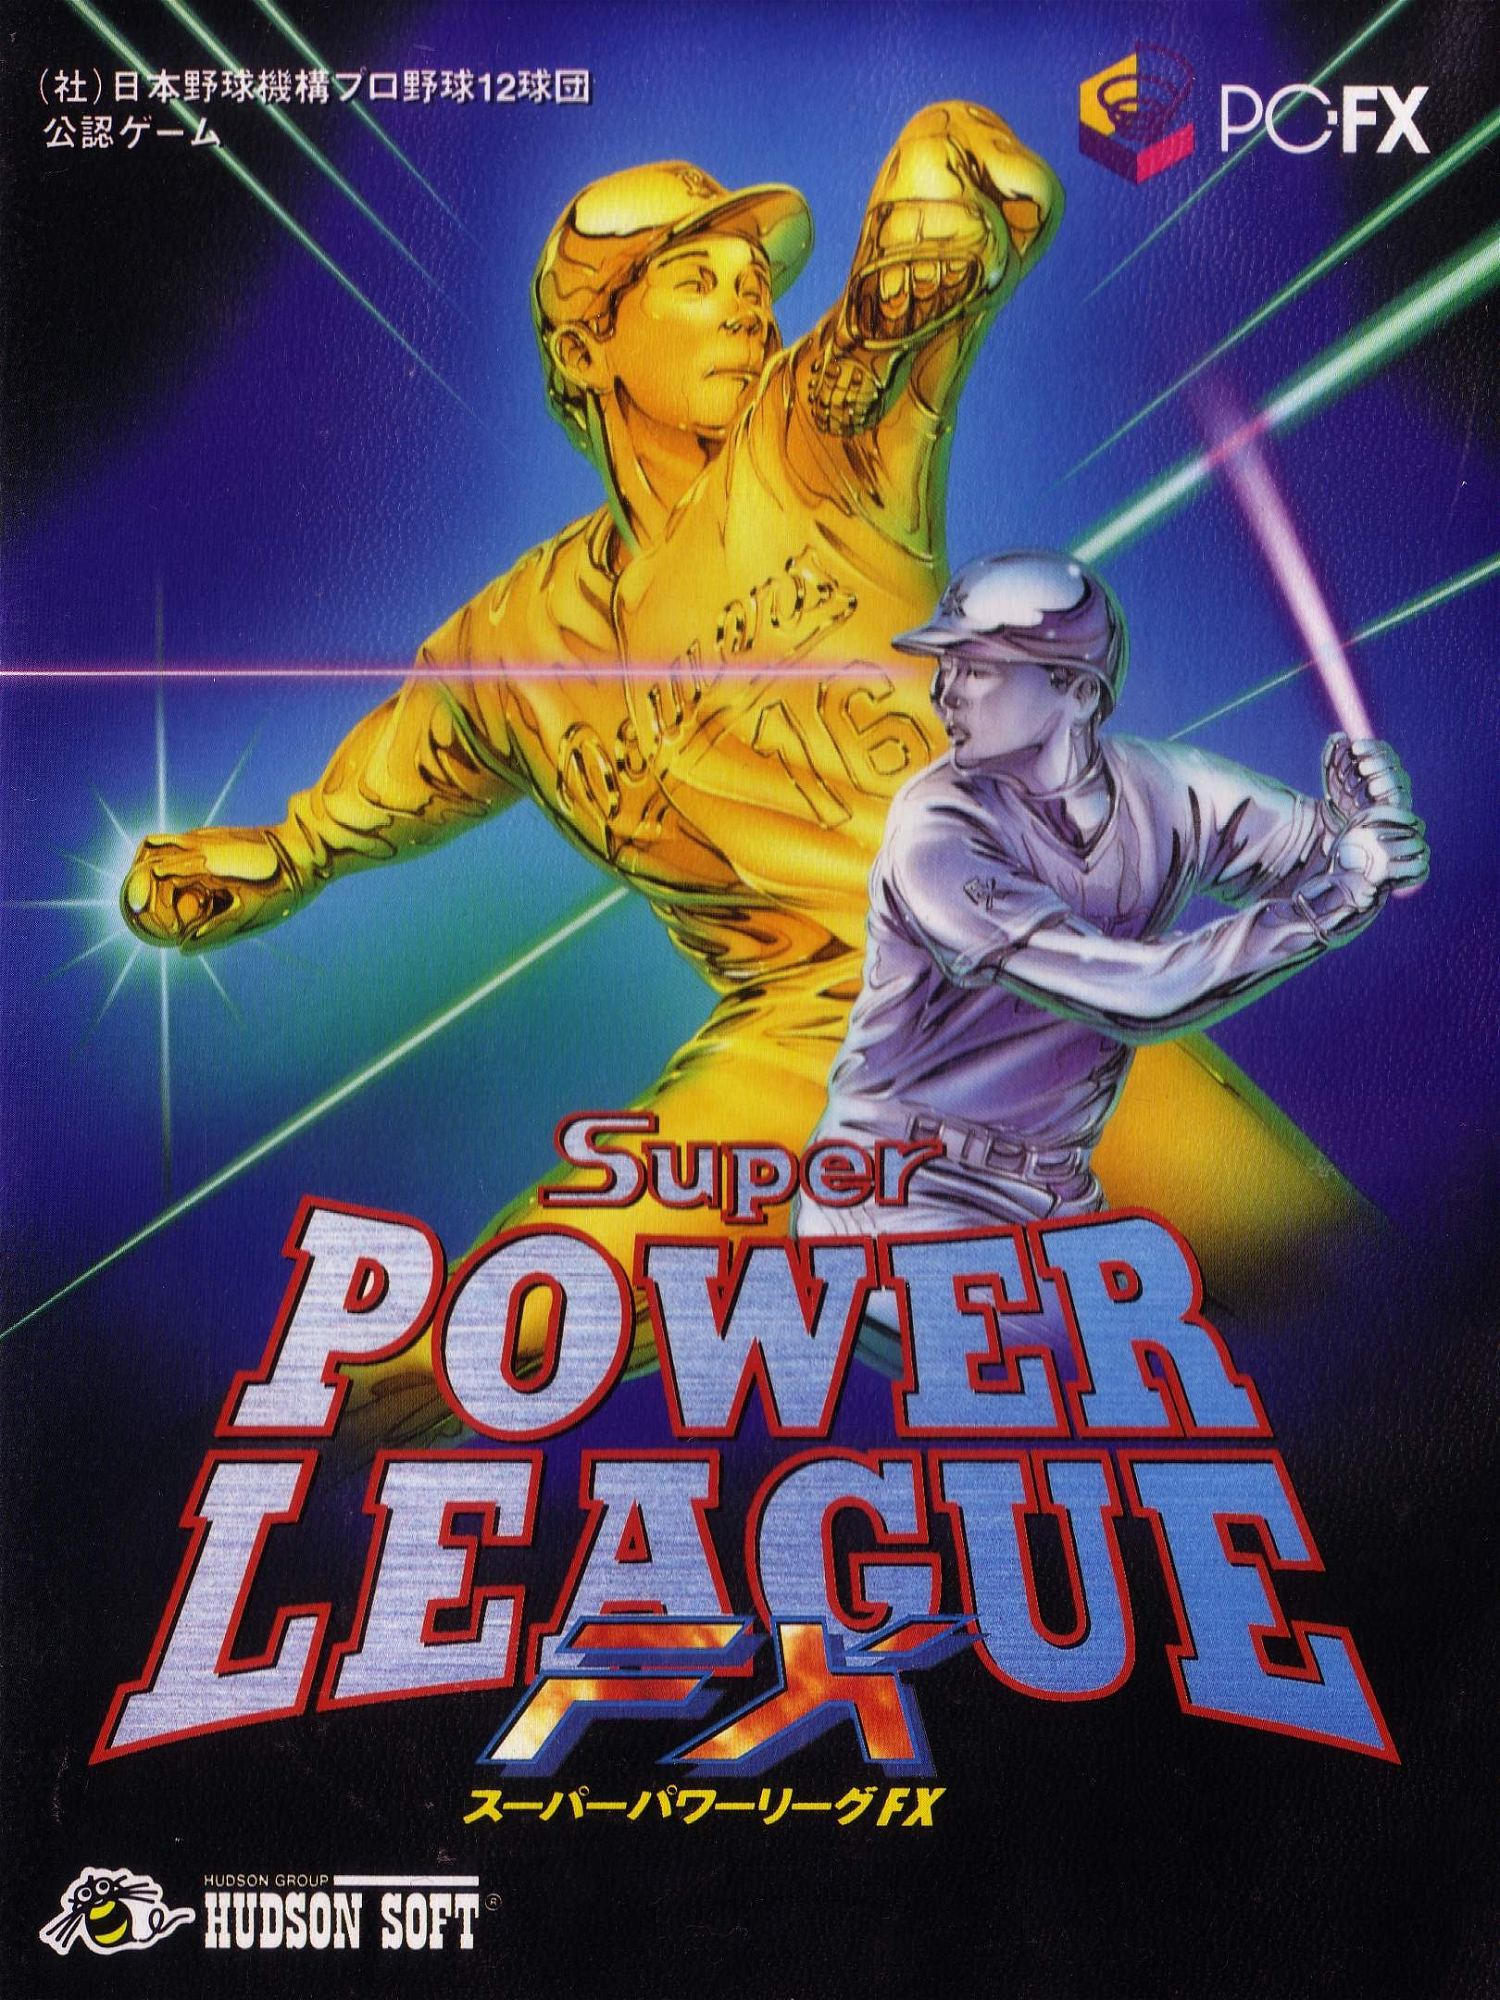 Super Power. PC-FX (PCFX) games. Super powerful. Super Power PC game Club.